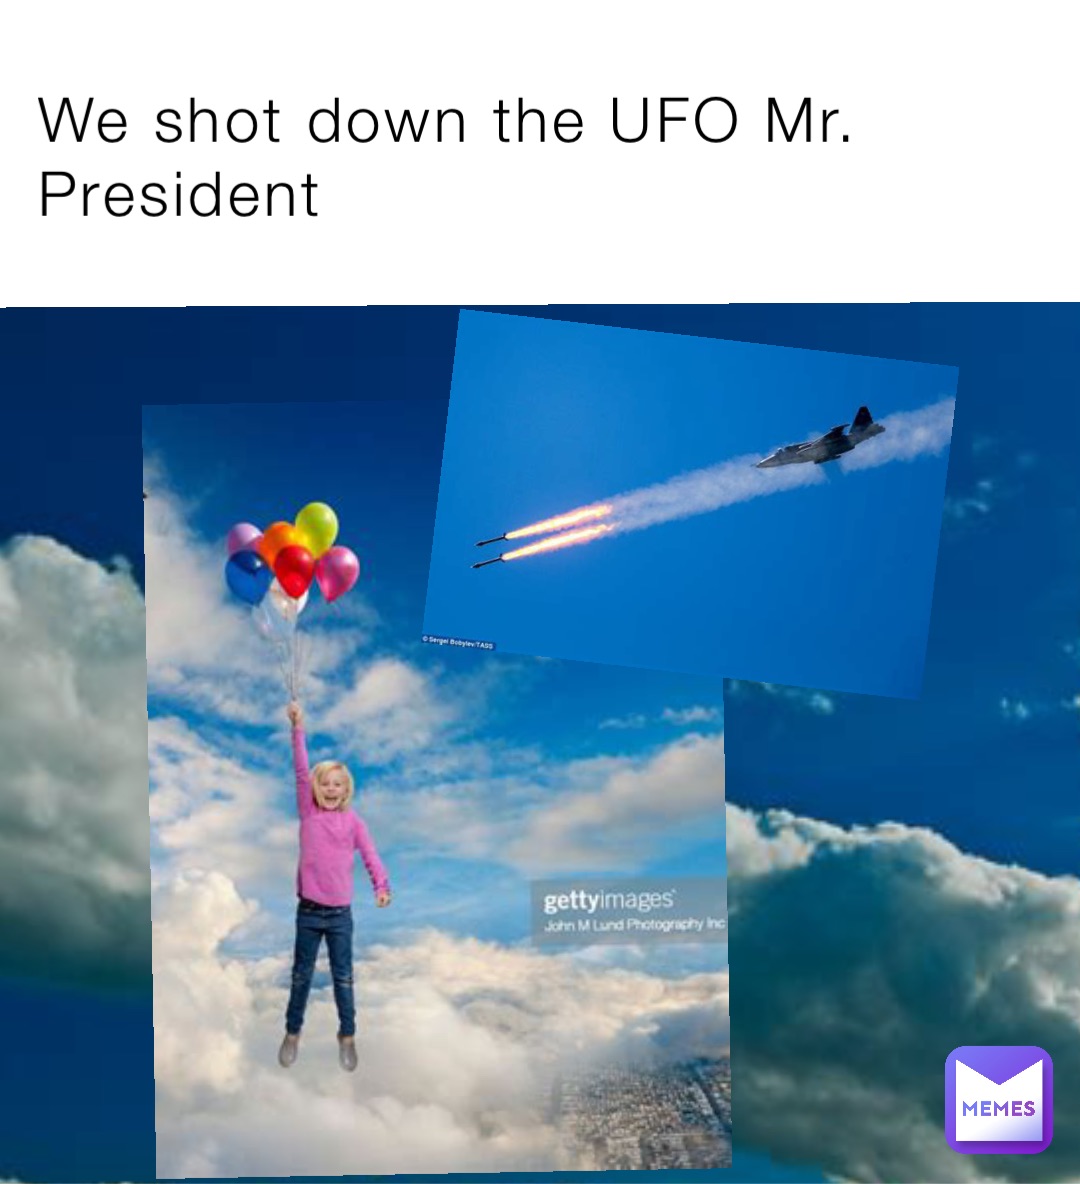 We shot down the UFO Mr. President